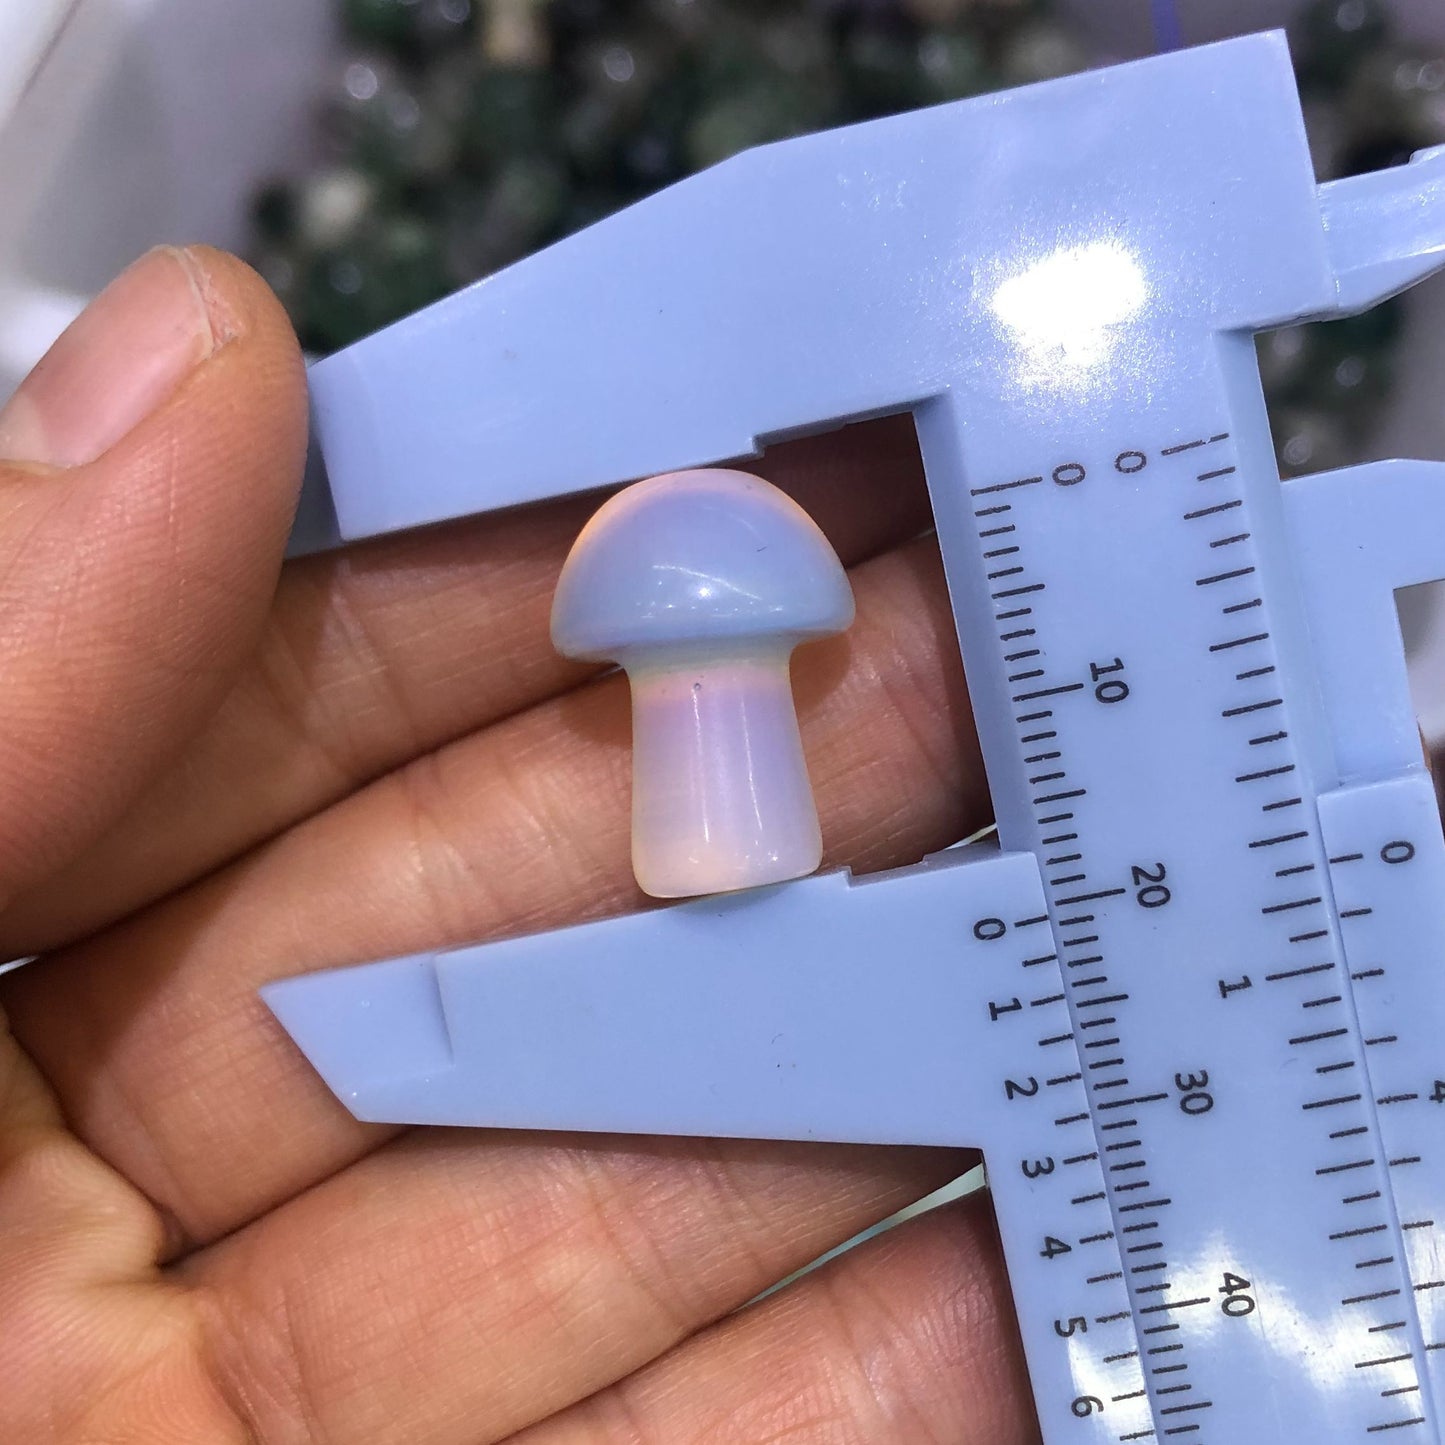 Natural Lovely Mini Opal Mushroom Accessories